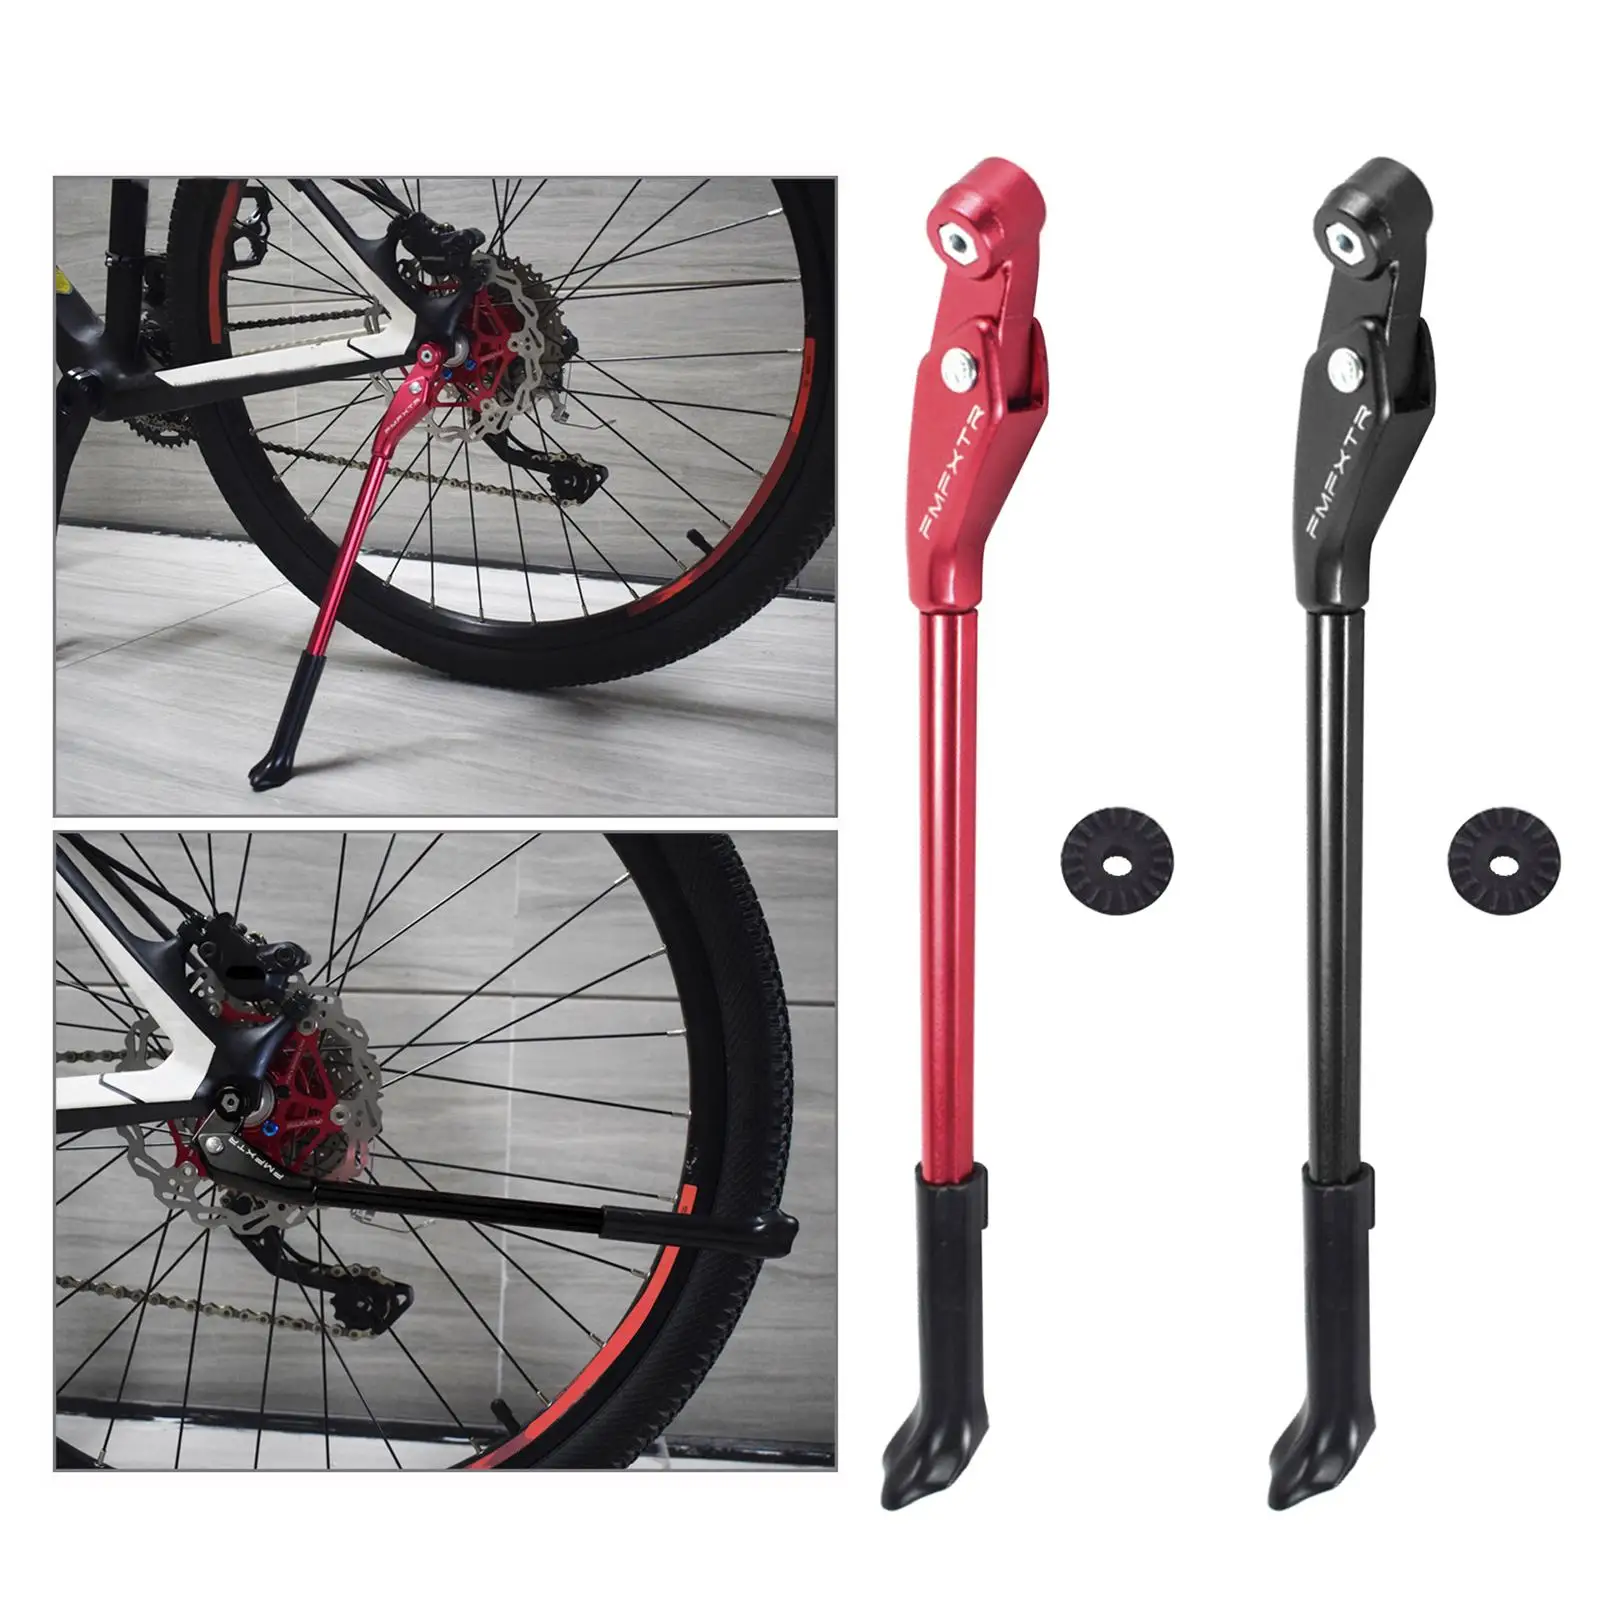 Adjustable Bike Stand Fit 26-29 